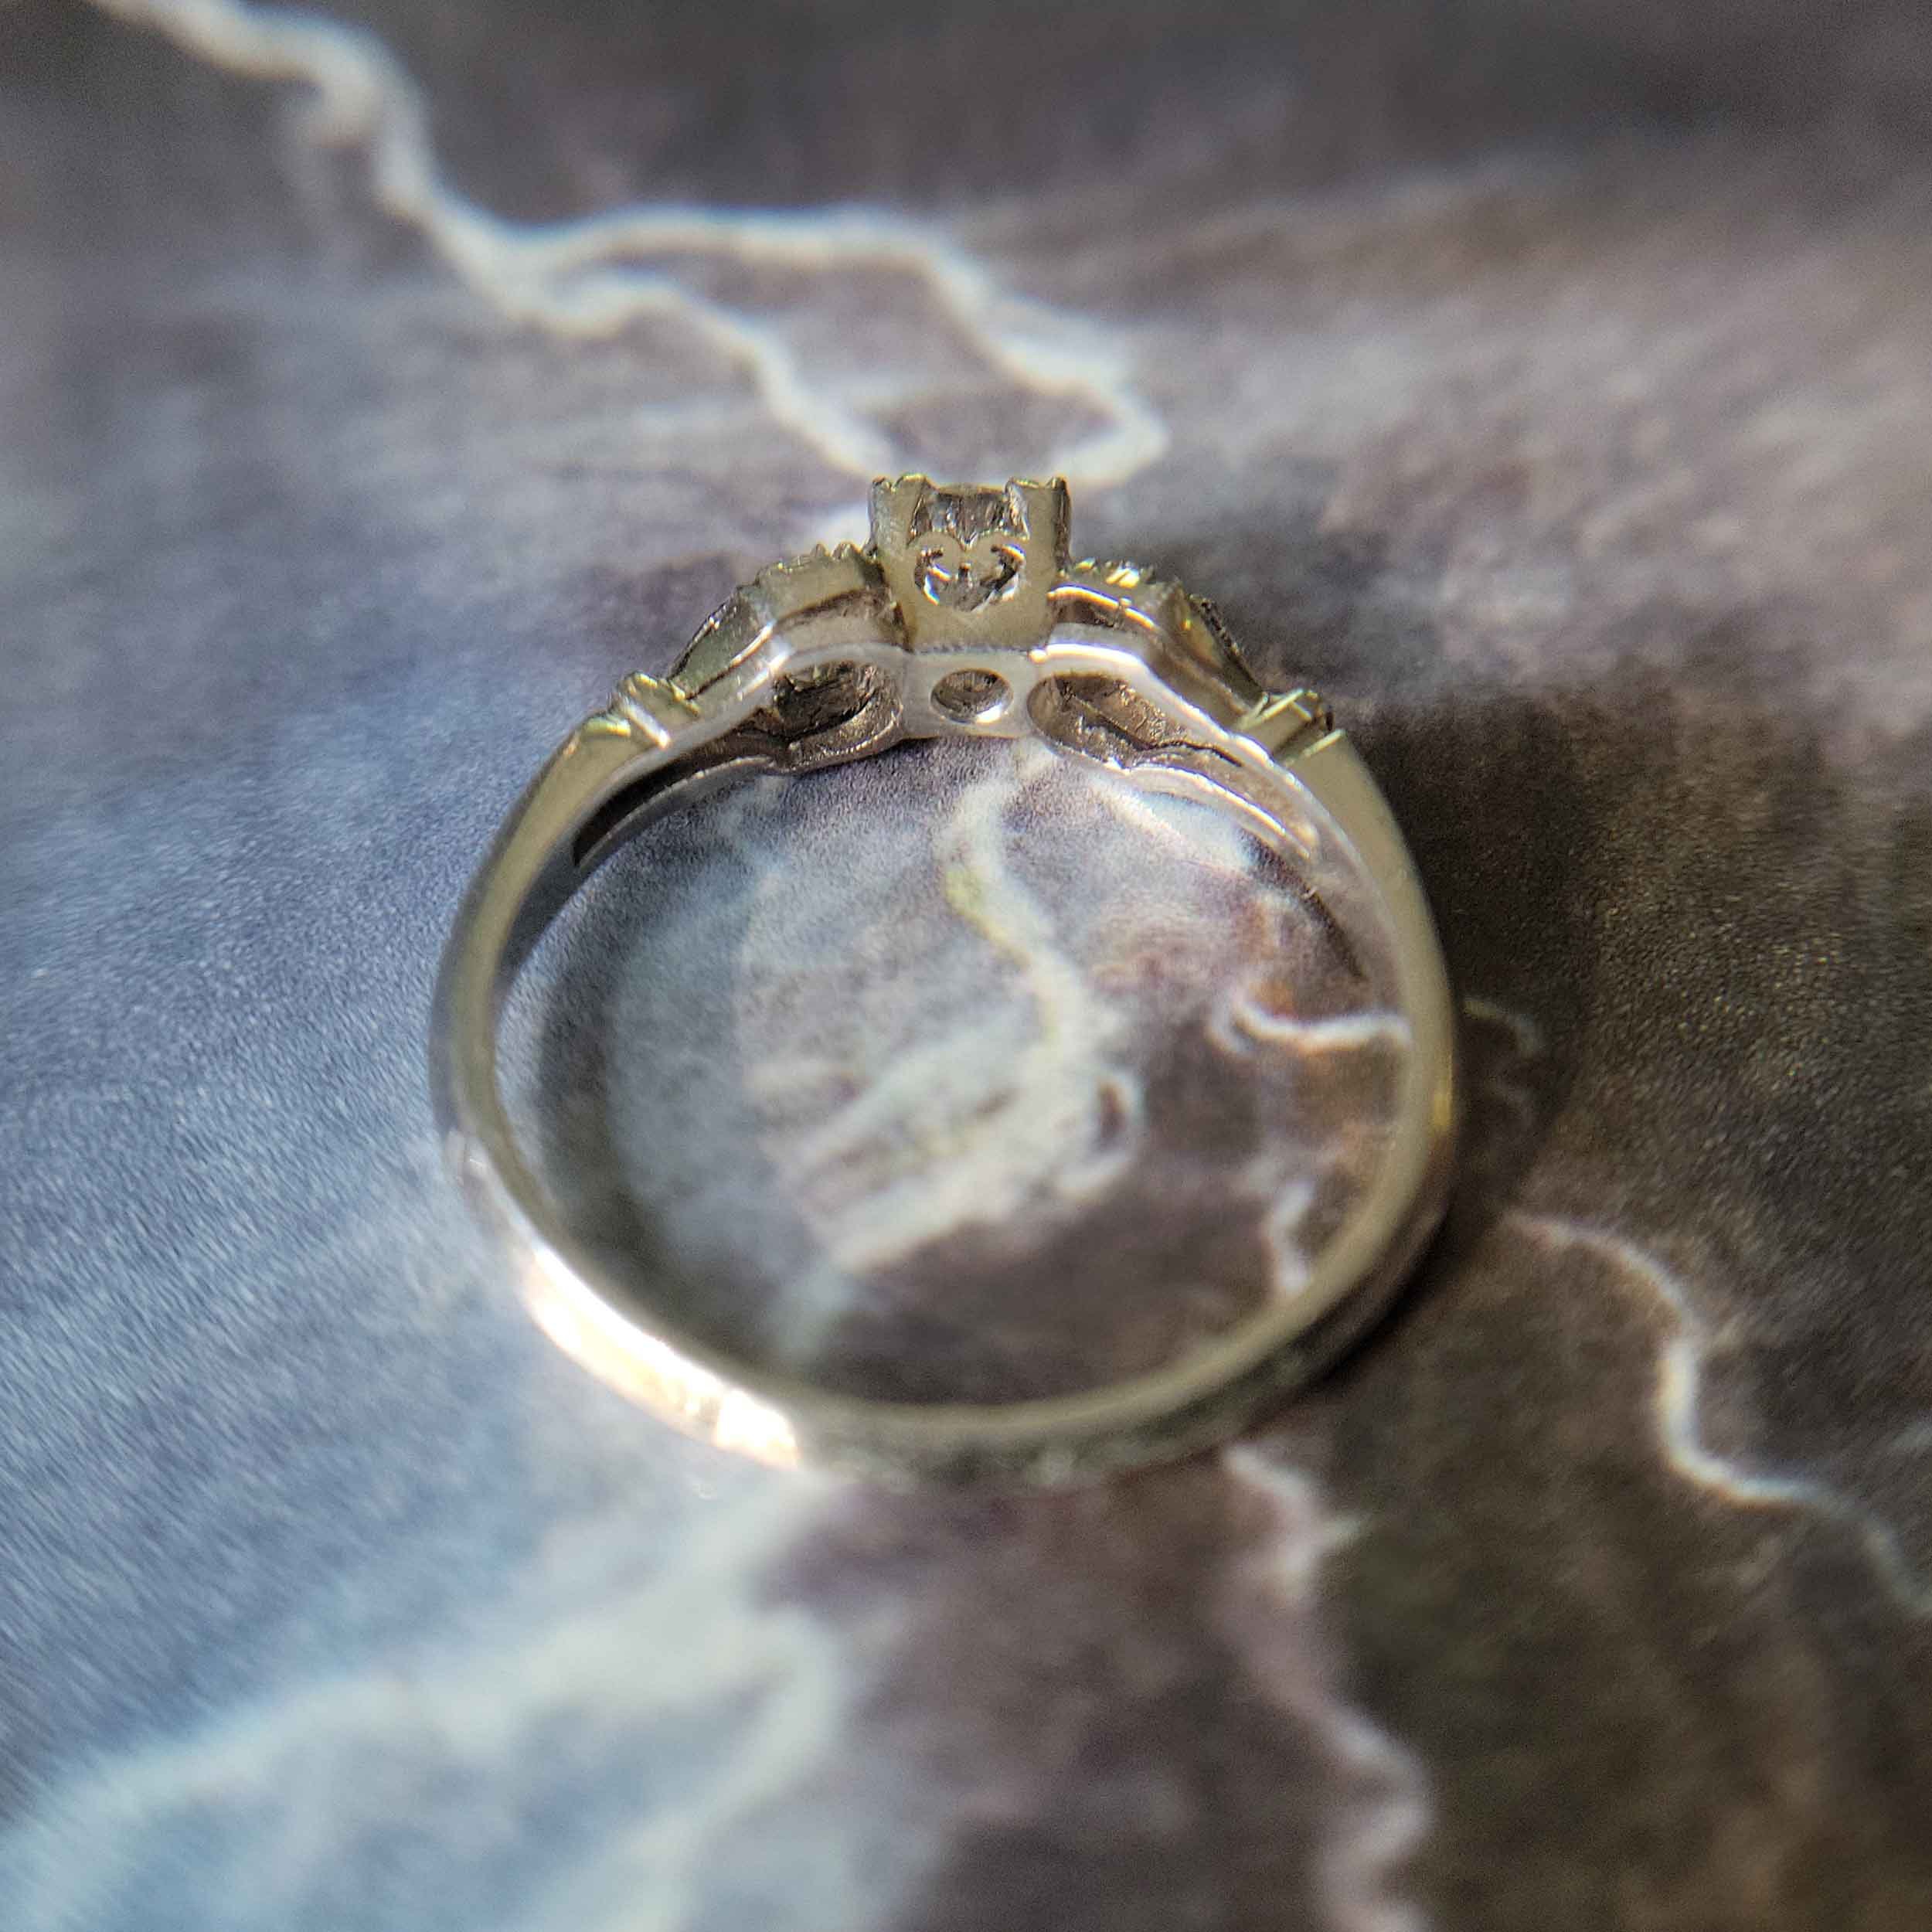 Low Profile 1940s Vintage Diamond Engagement Ring 14K White Gold .05ct G/Si1